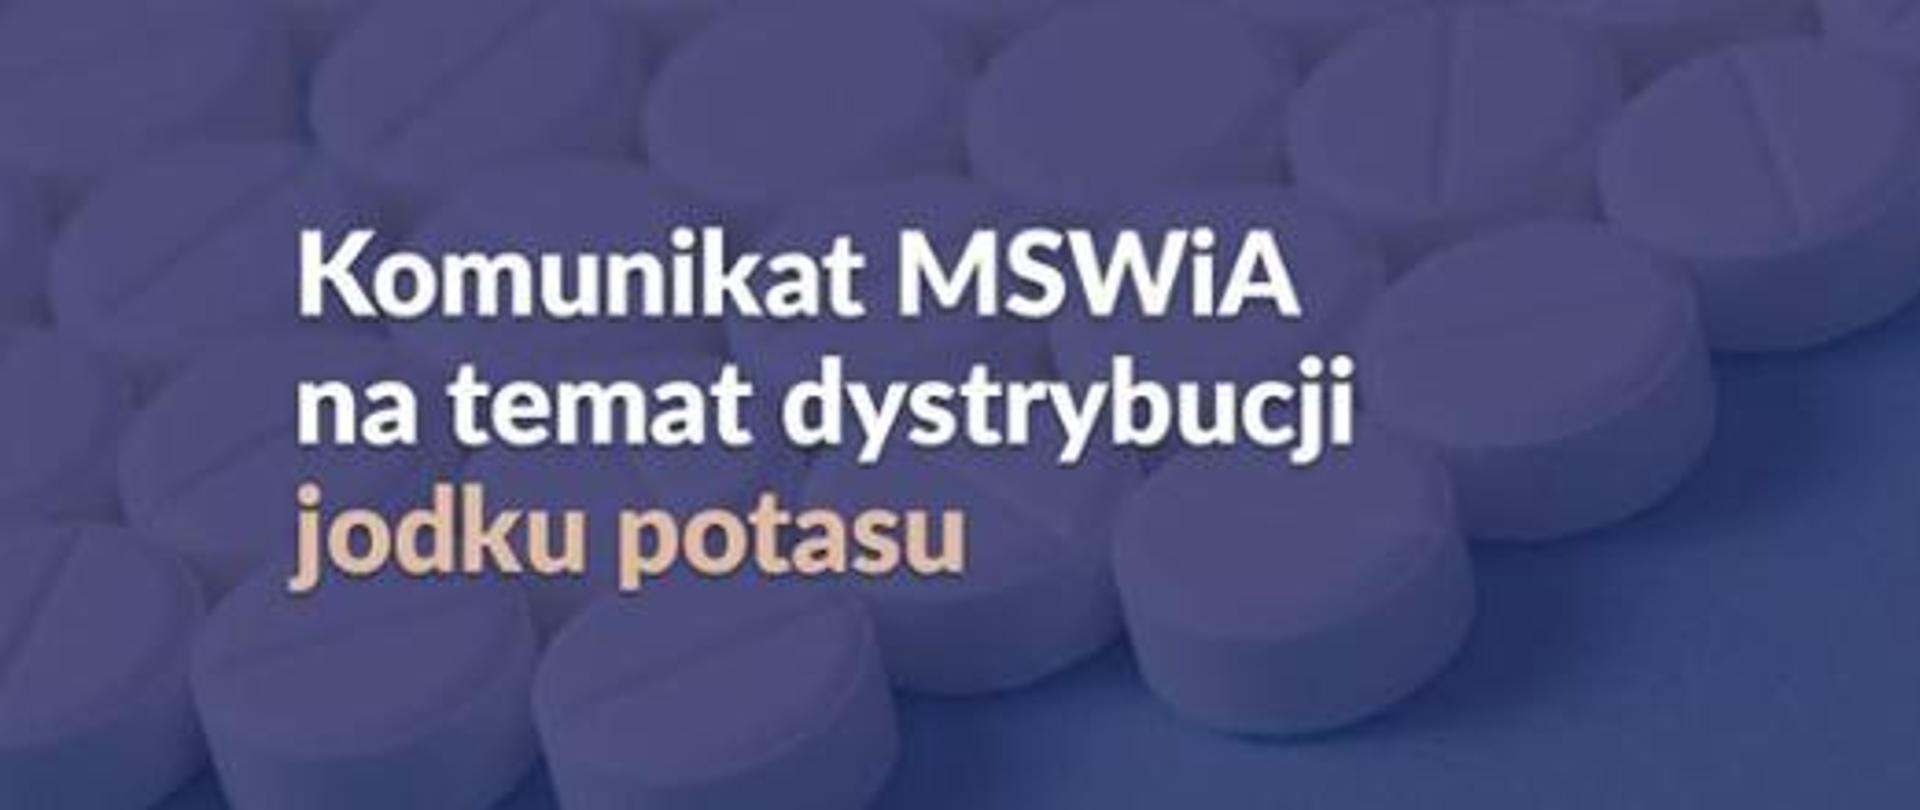 Komunikat MSWiA na temat dystrybucji jodku potasu 2